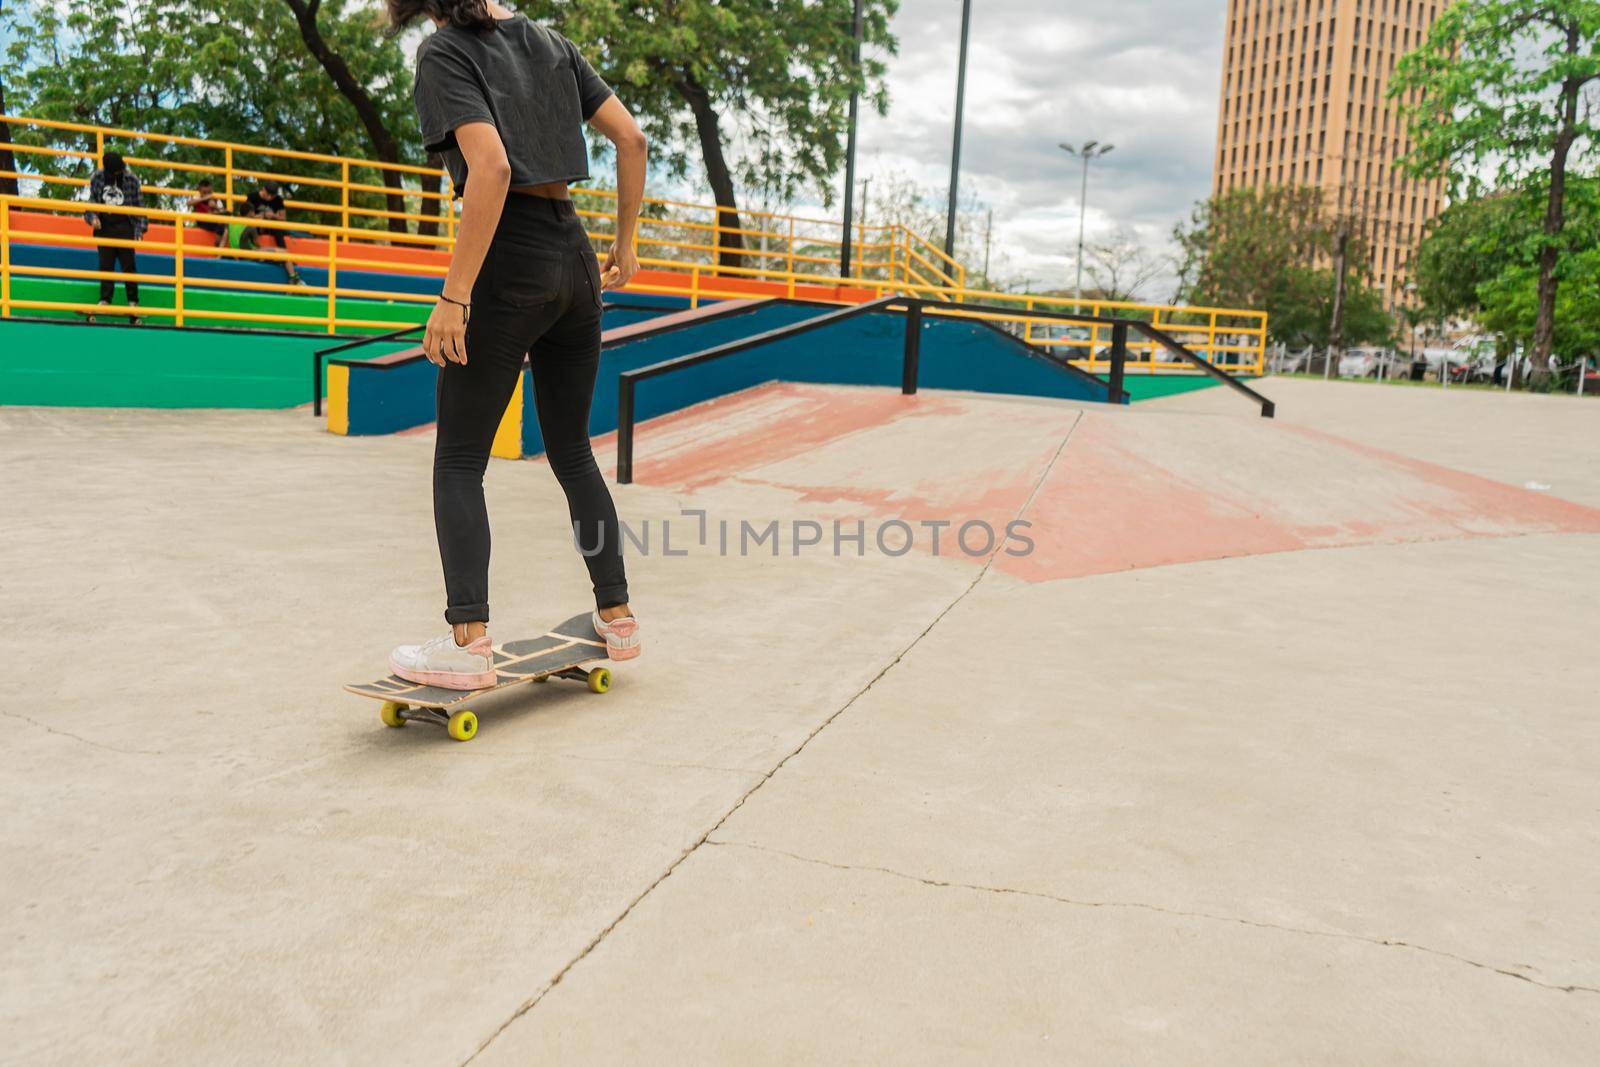 Latina teen woman rollerblading in an outdoor park in Managua, Nicaragua